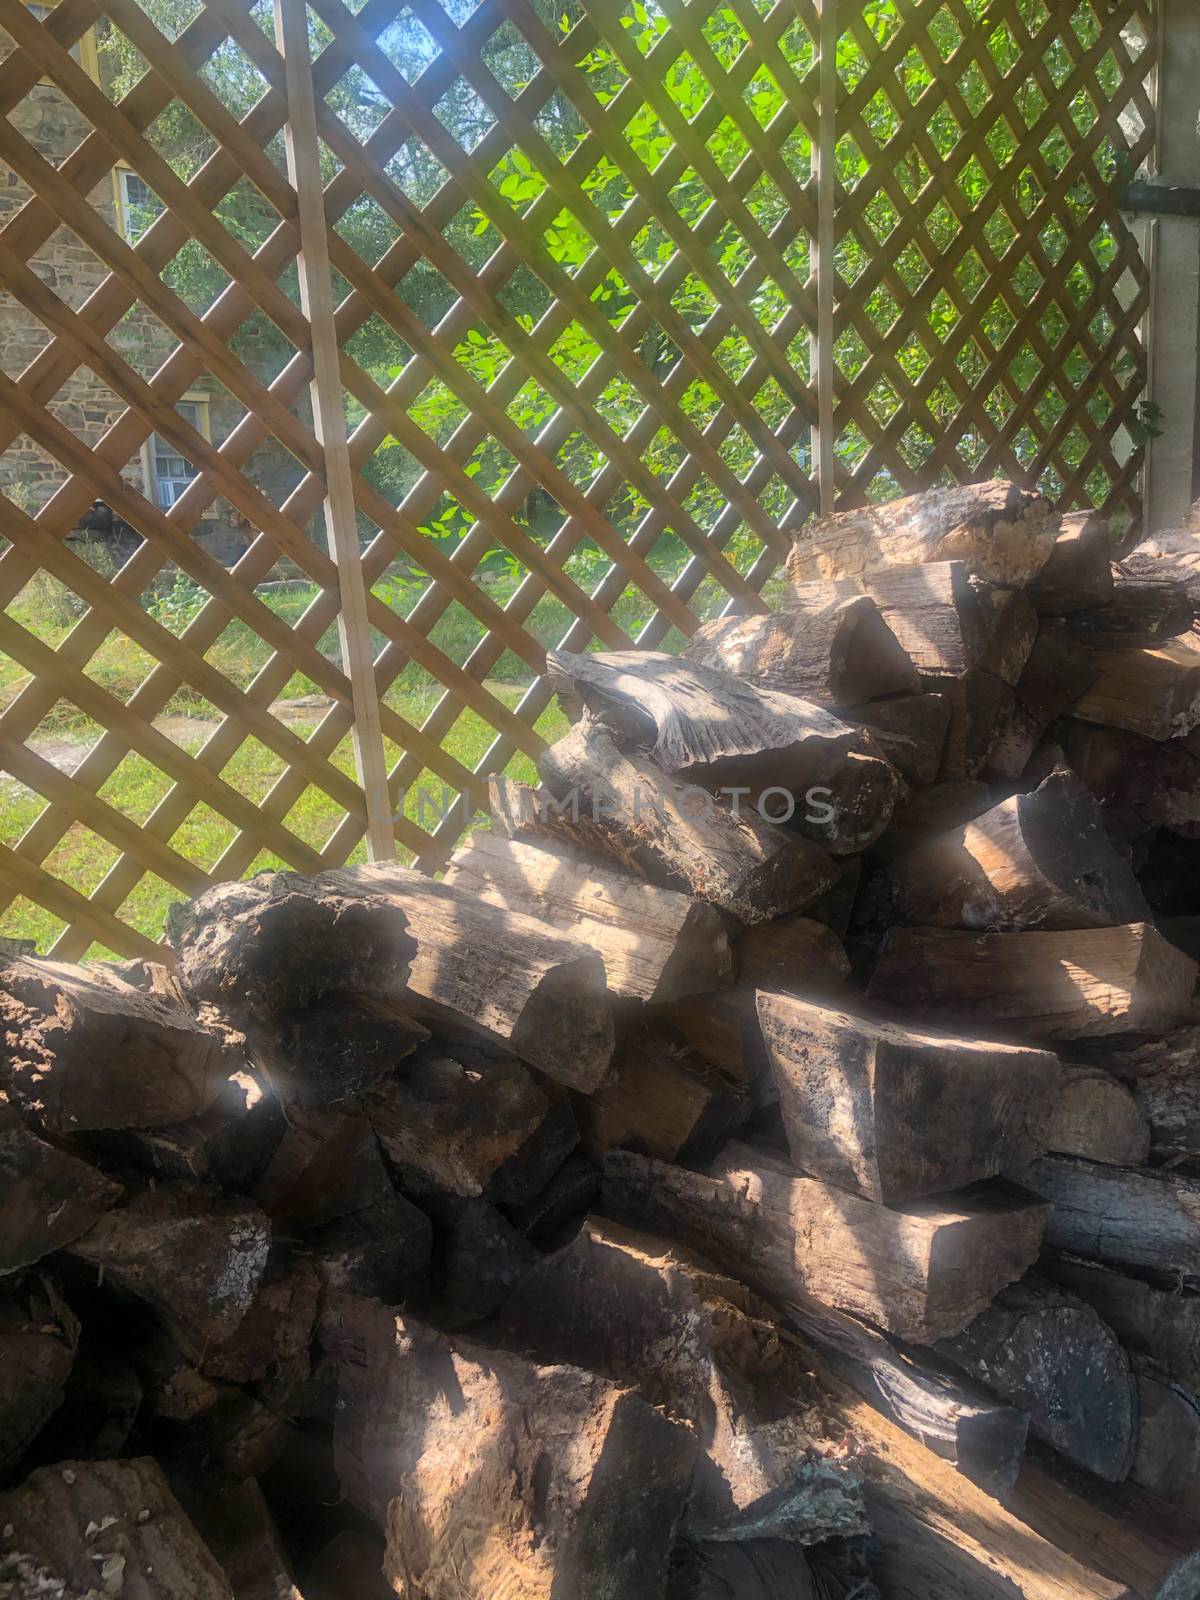 Chopped fire wood stacked behind garden lattice. by marysalen